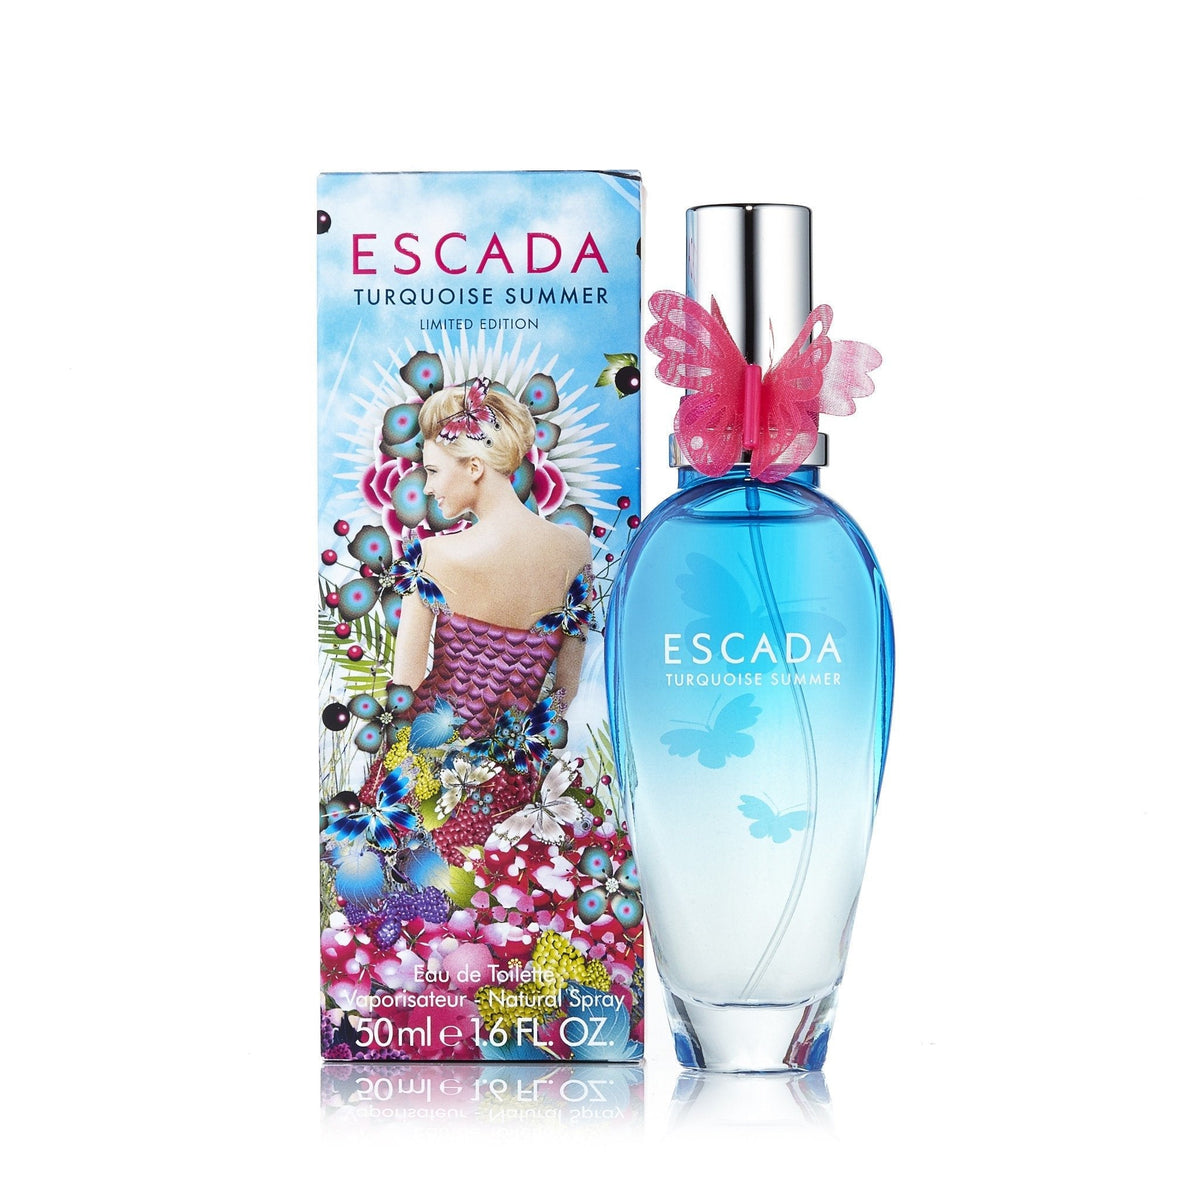  Turquoise Summer Eau de Toilette Spray for Women by Escada 1.6 oz.